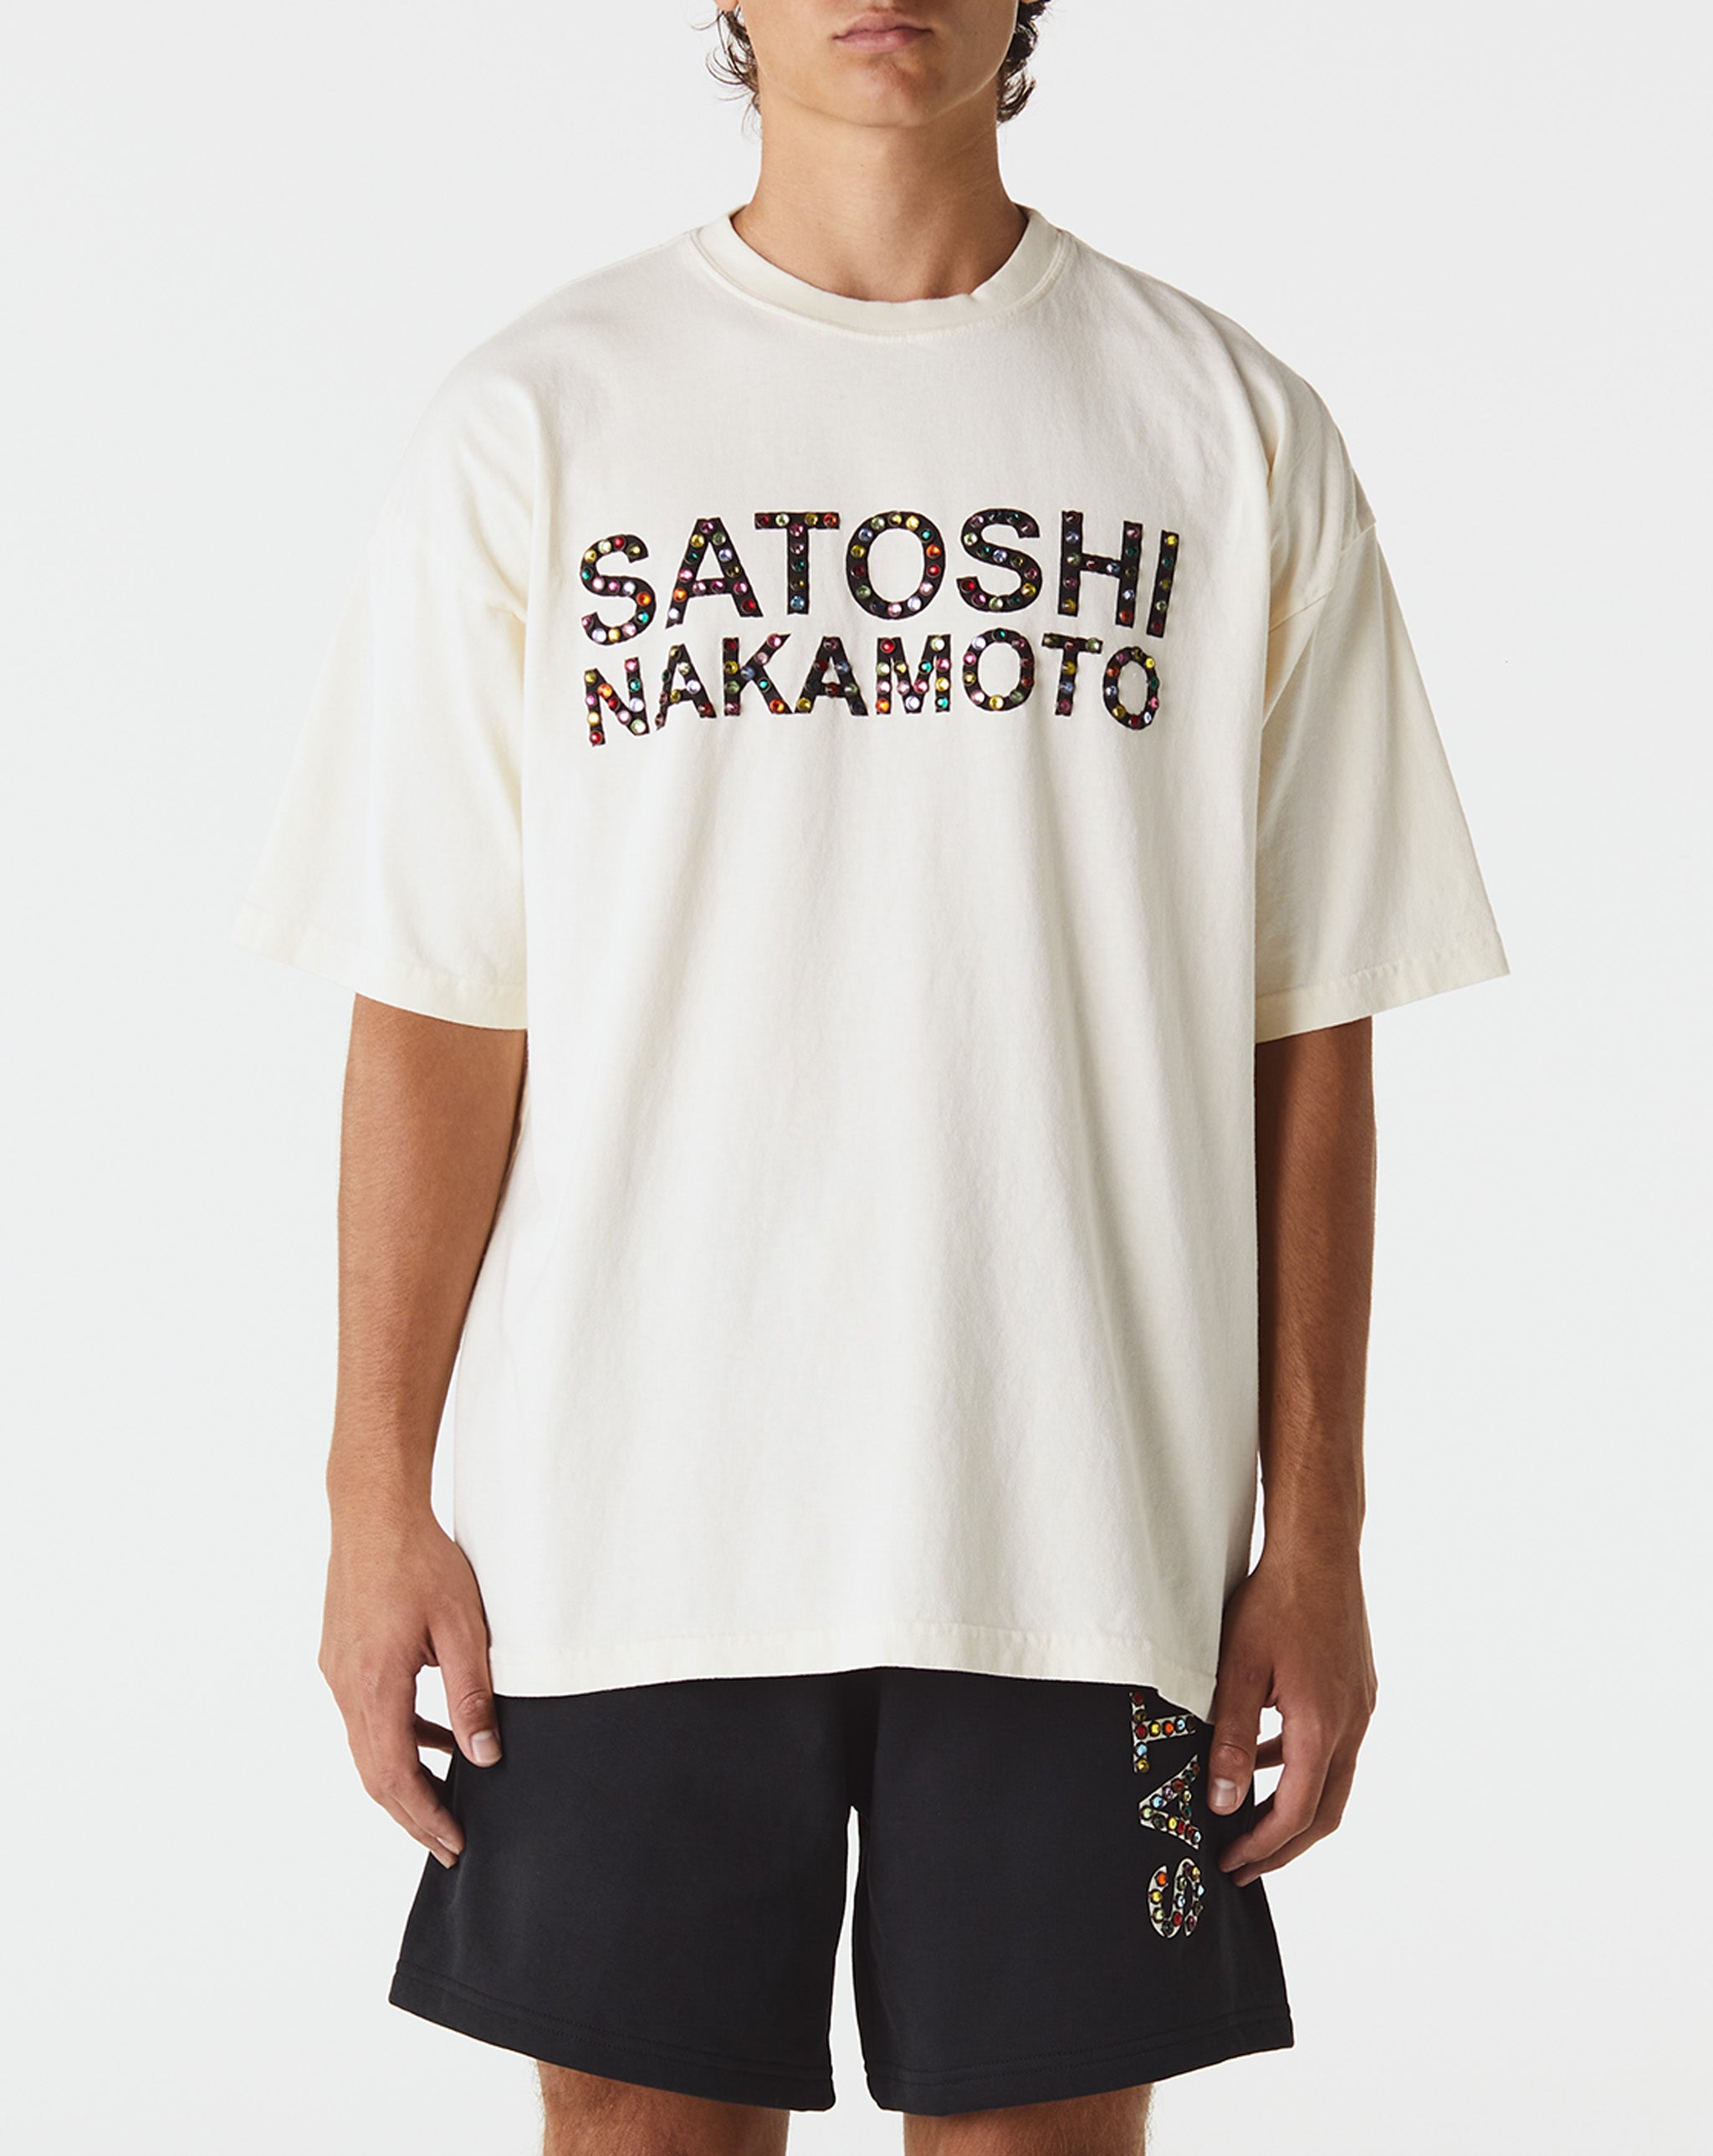 Satoshi Nakamoto gentle monster unac n 01or square frame sunglasses item  - Cheap Erlebniswelt-fliegenfischen Jordan outlet